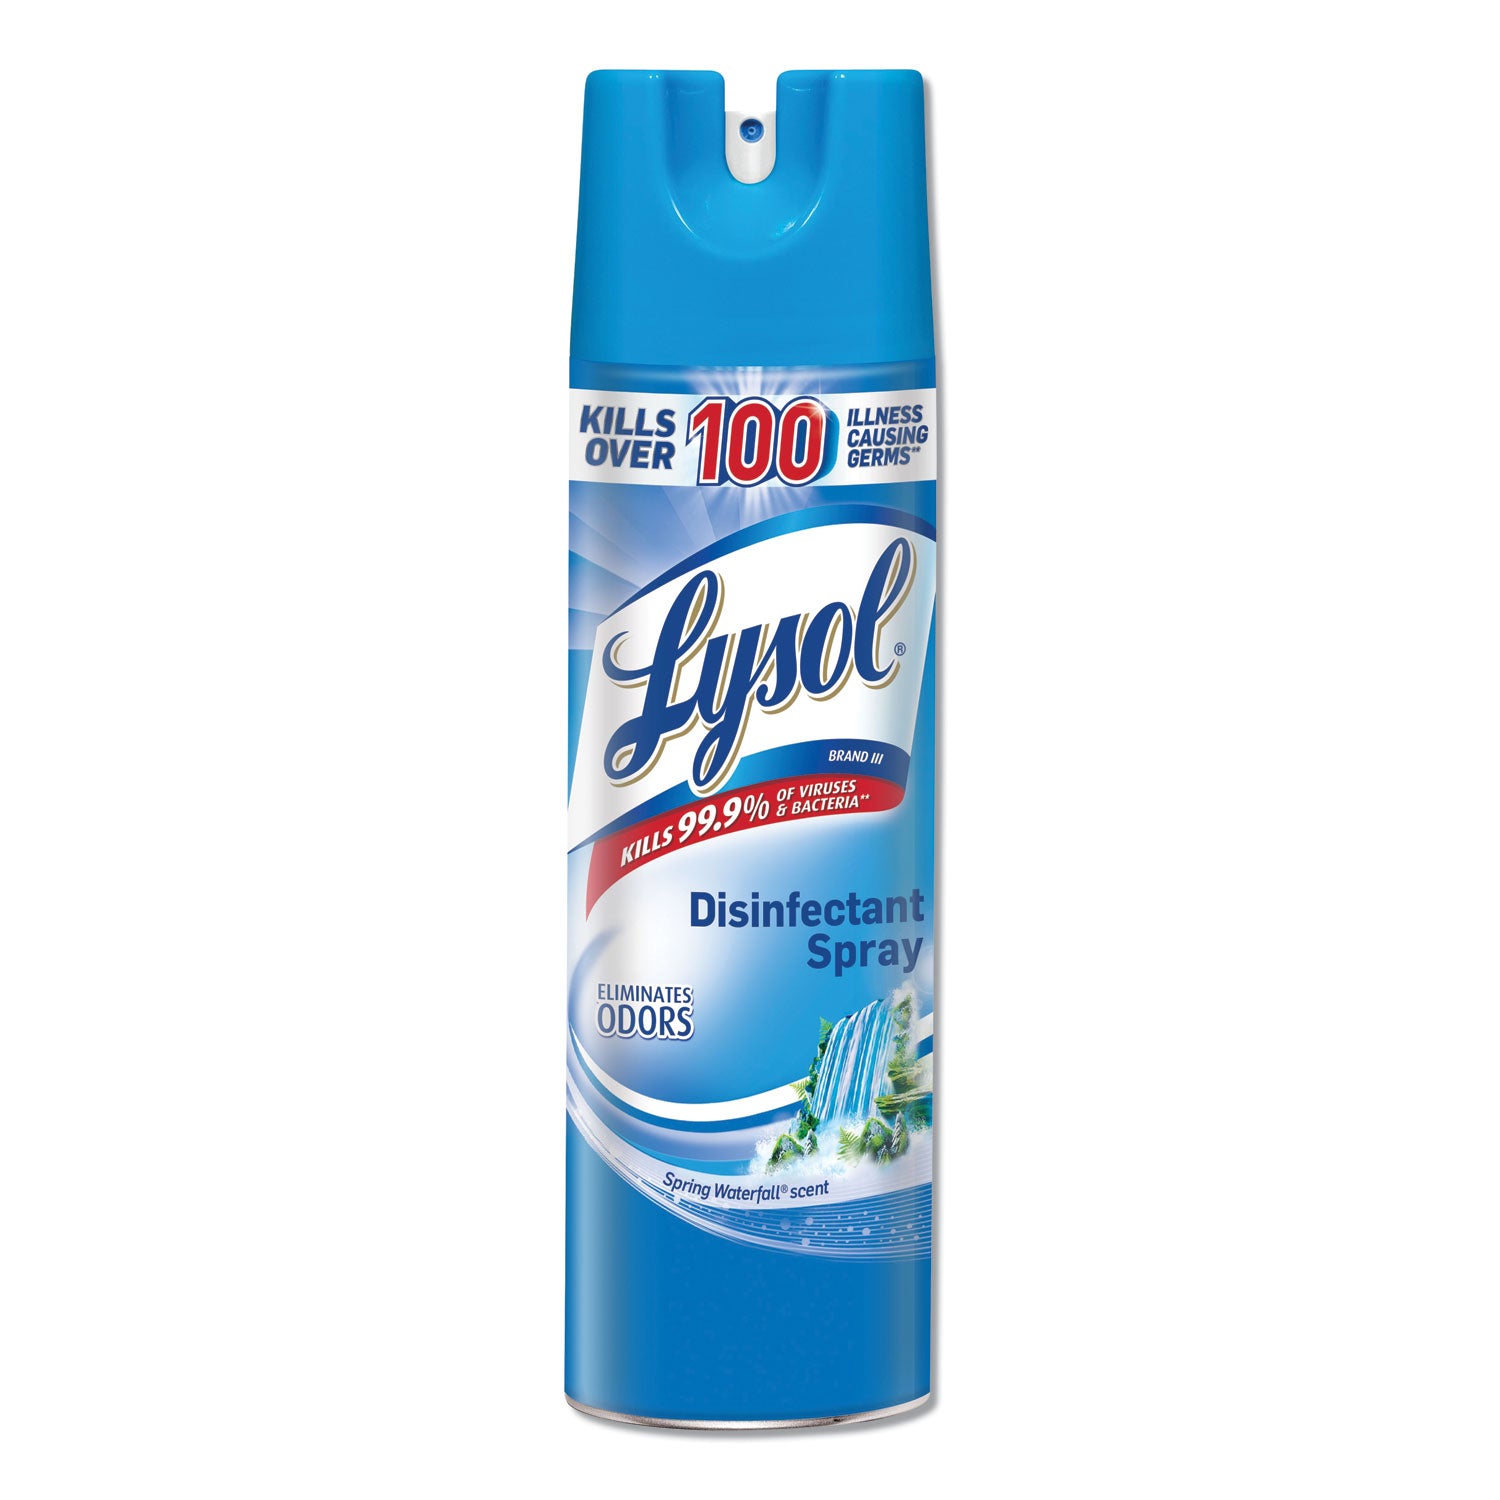 disinfectant-spray-spring-waterfall-scent-19-oz-aerosol-spray_rac79326ct - 1